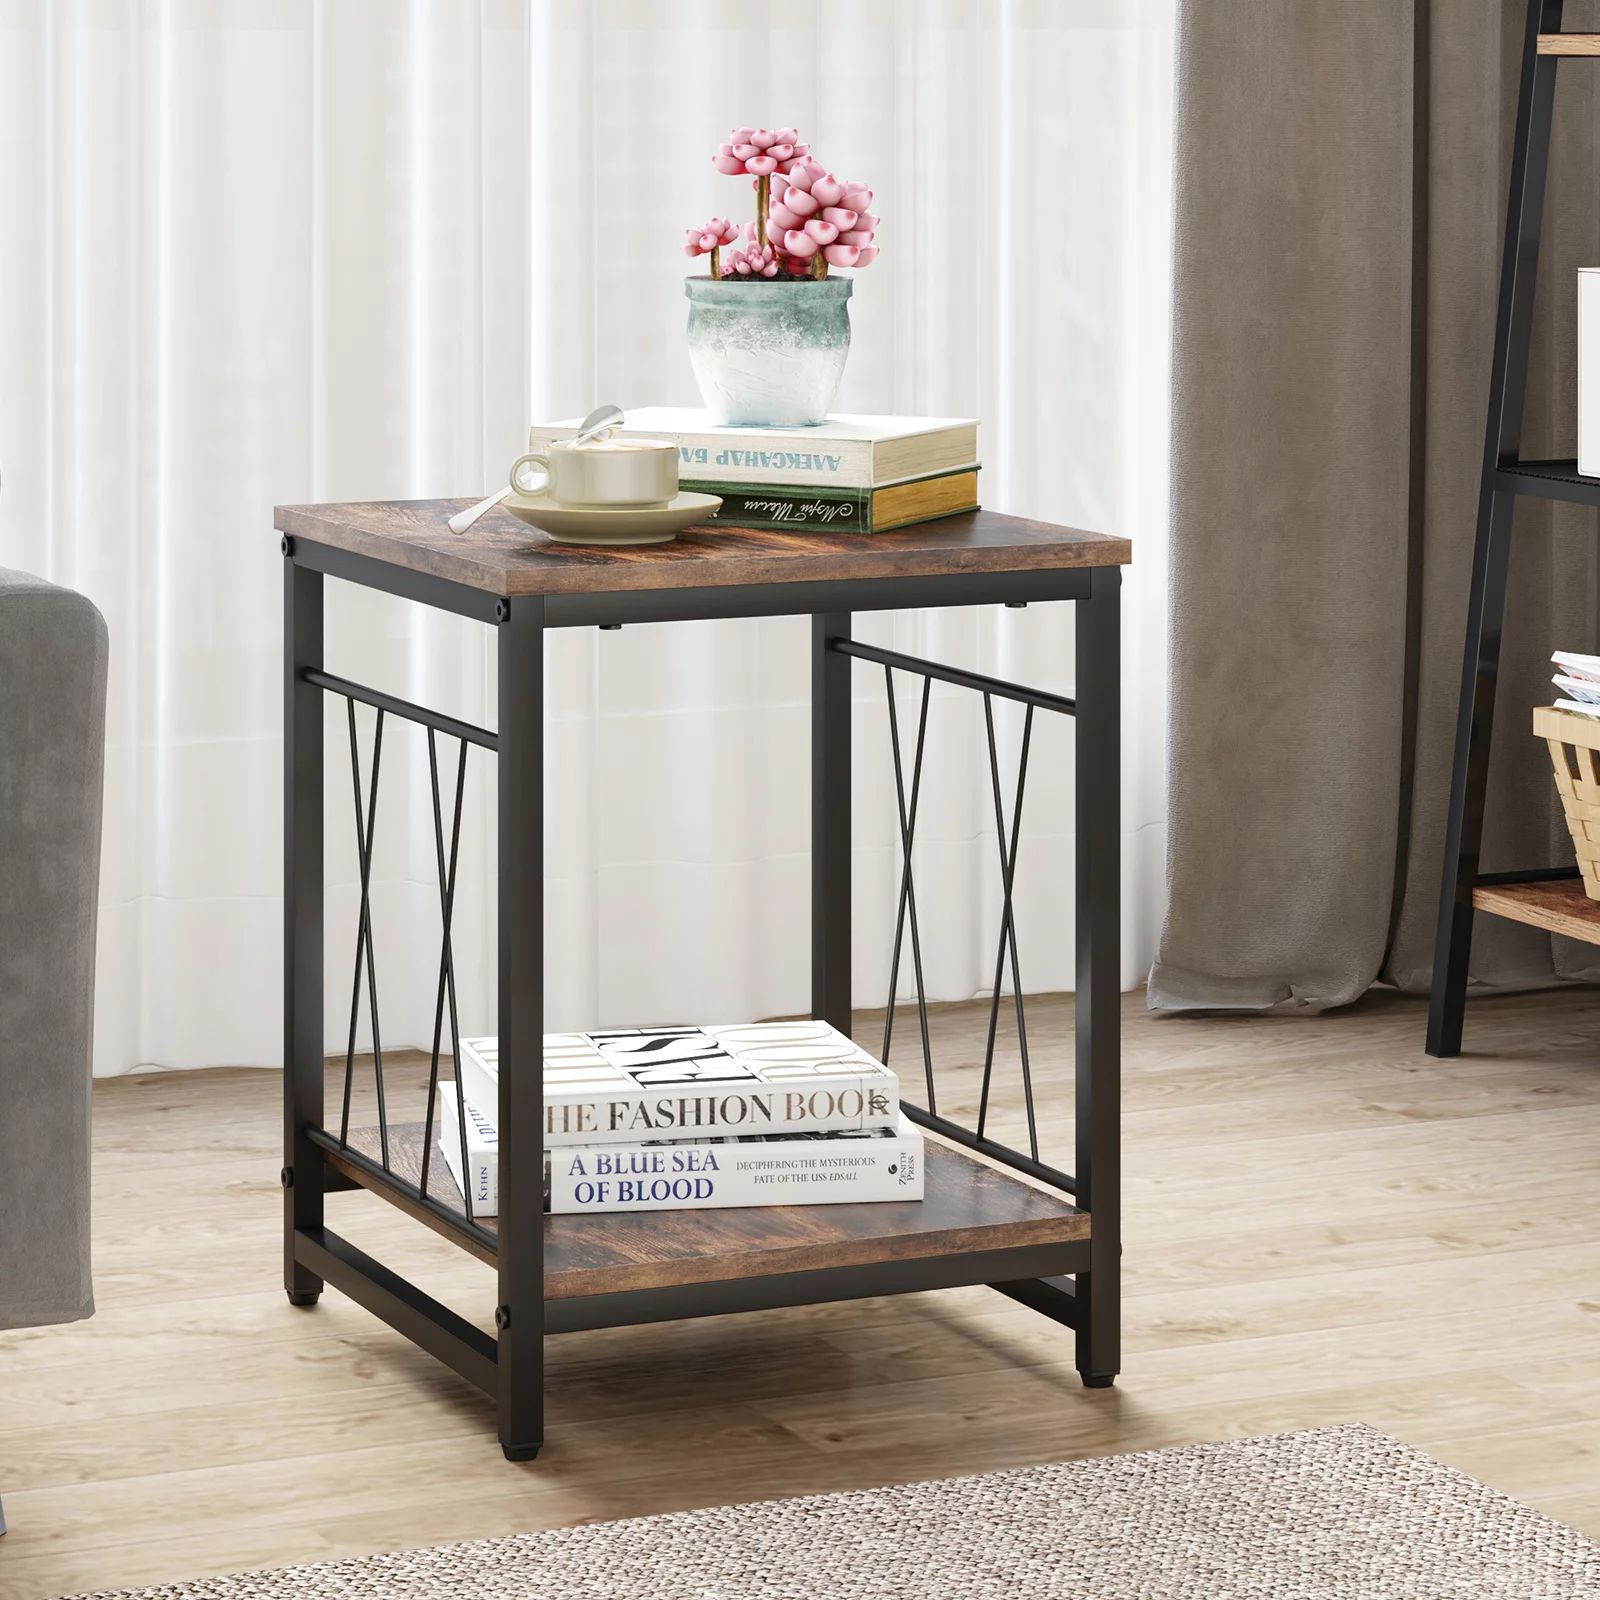 2 Tier Side End Table Nightstand Industrial Wood and Metal for Living Room Bedroom, Rustic Brown | Walmart (US)